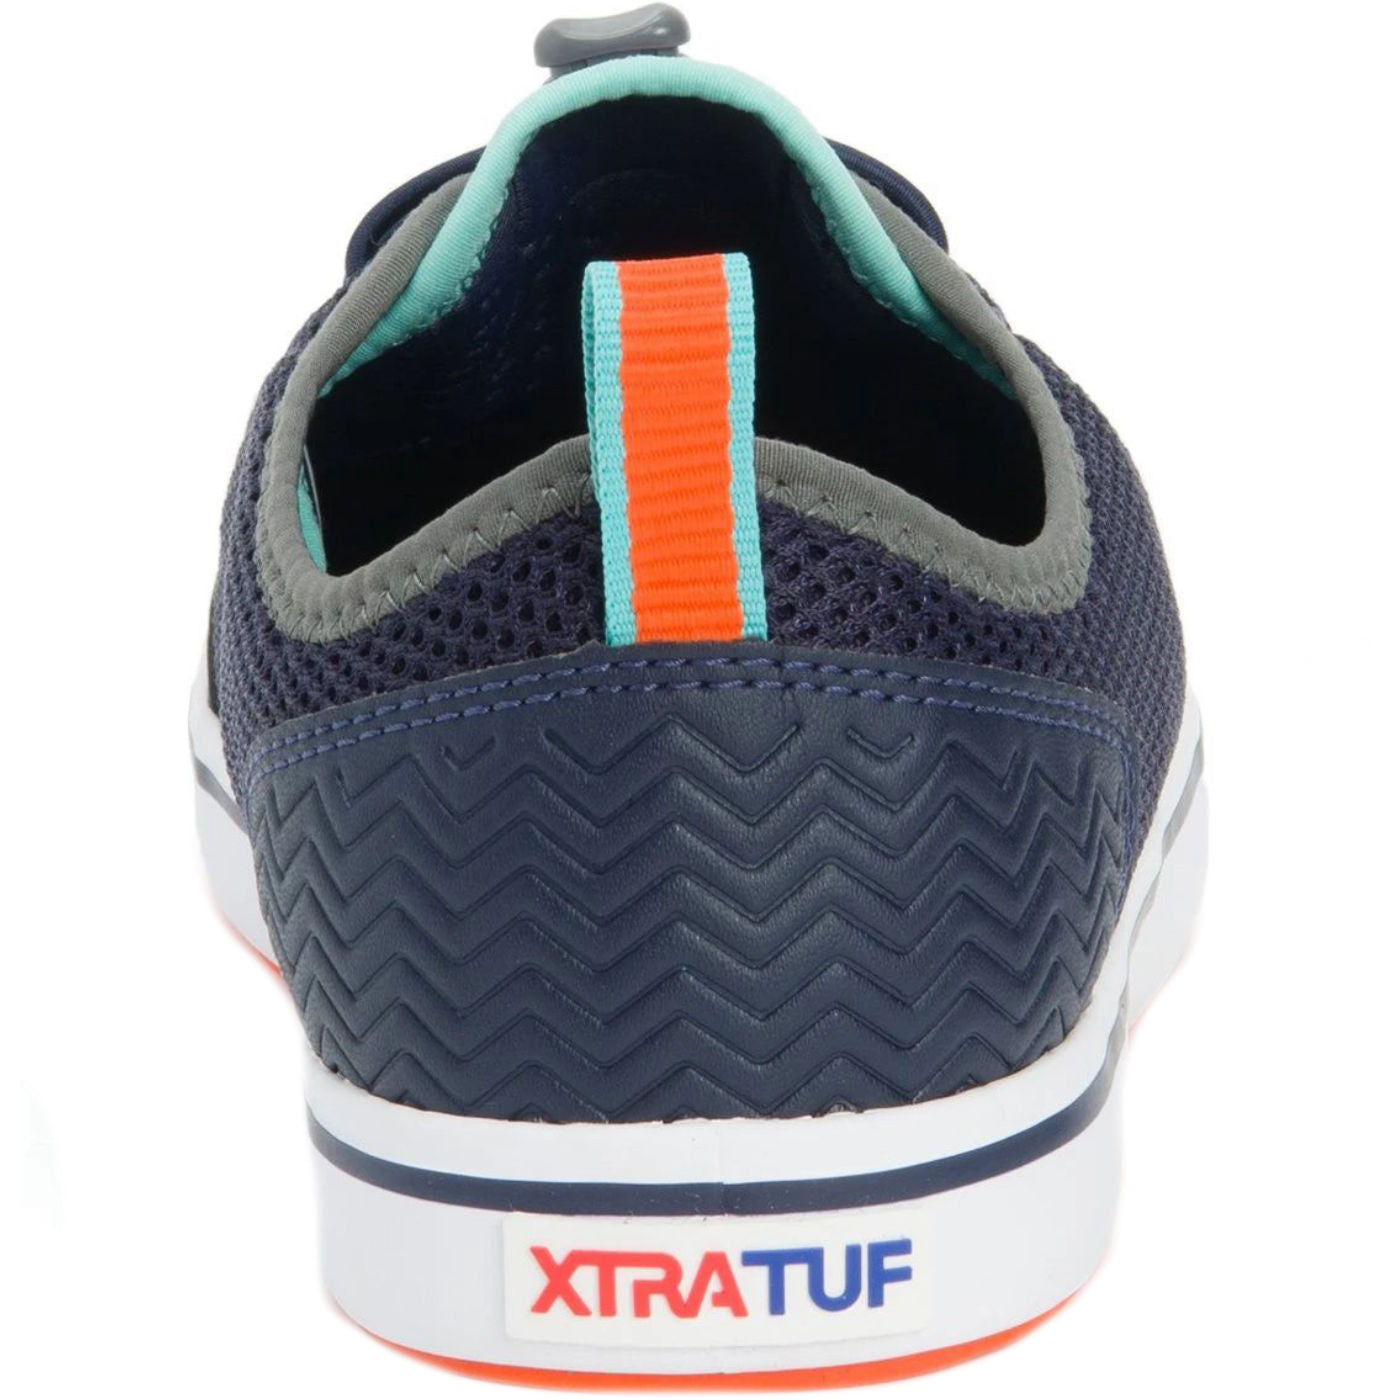 XTRATUF Men's Riptide Navy Water Shoes XMR-201